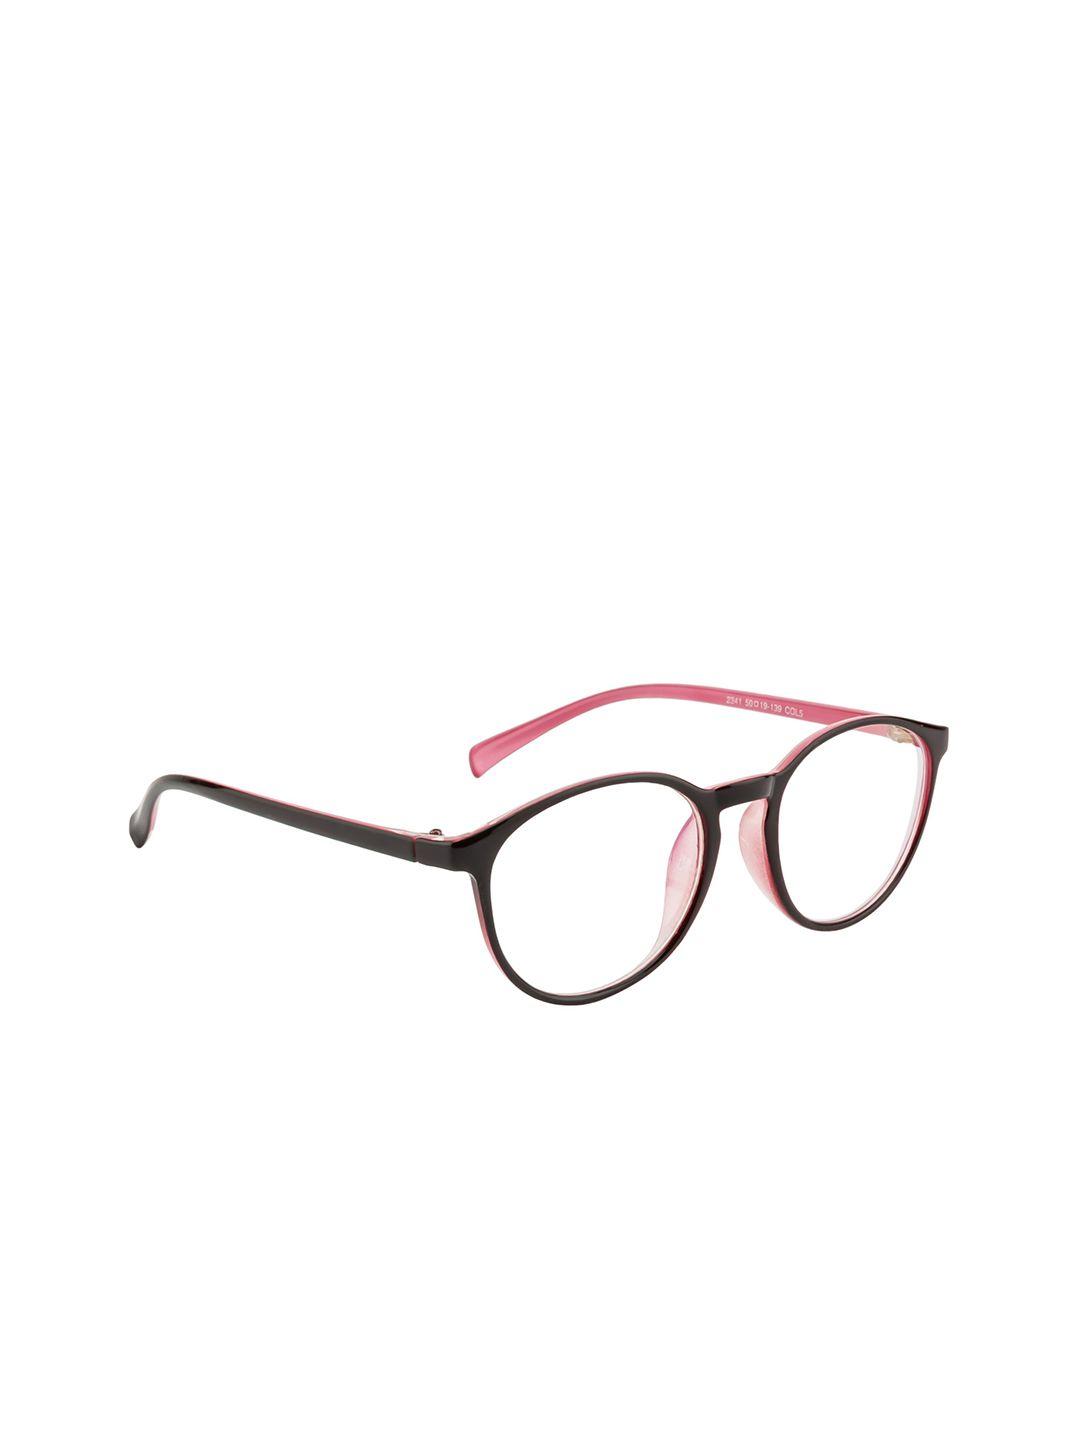 gold berg pink & black full rim cateye frames eyeglasses